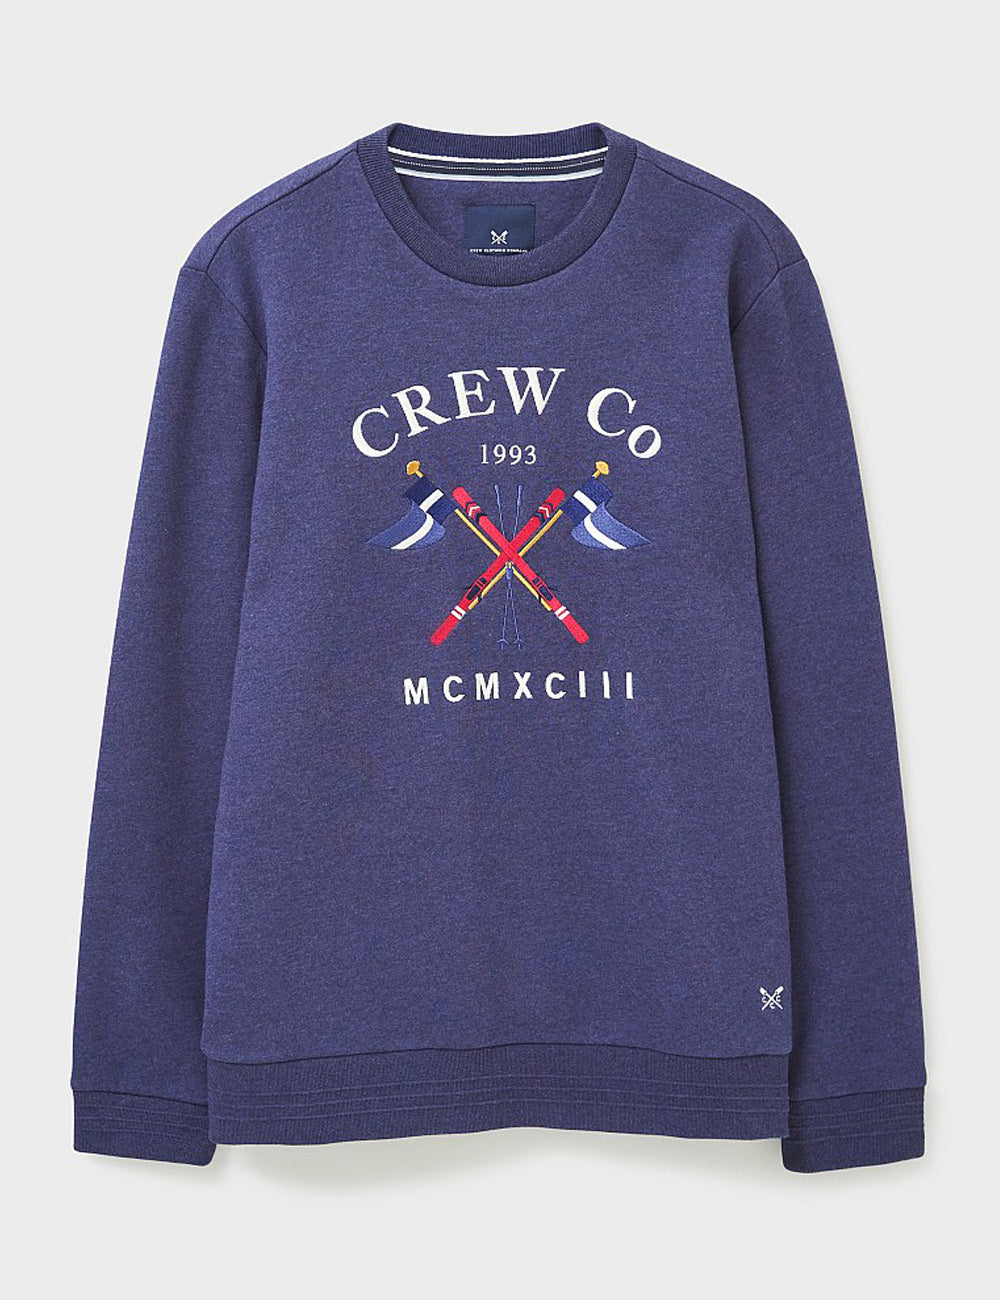 Crew Clothing Graphic Crew Neck Sweatshirt - Navy Marl